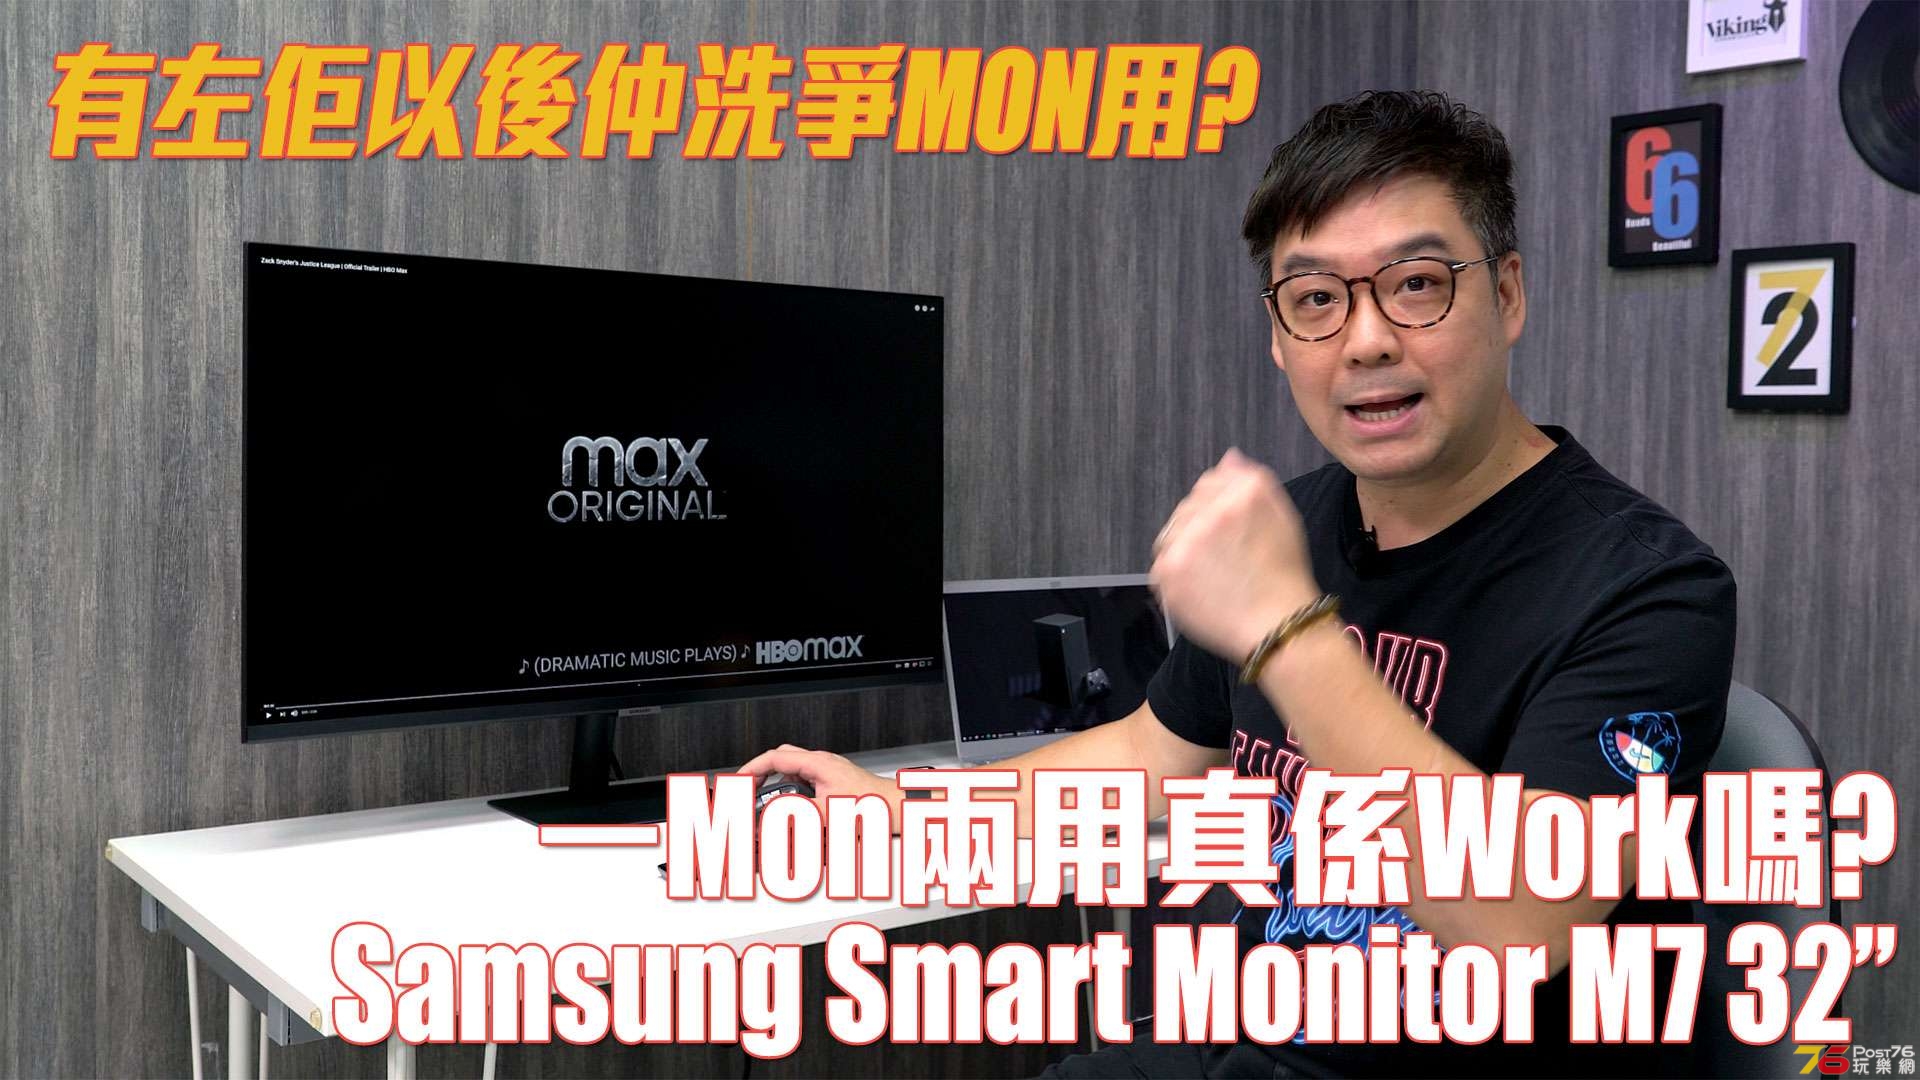 samsung-smart-monitor-M7-unbox-review-forum.jpg